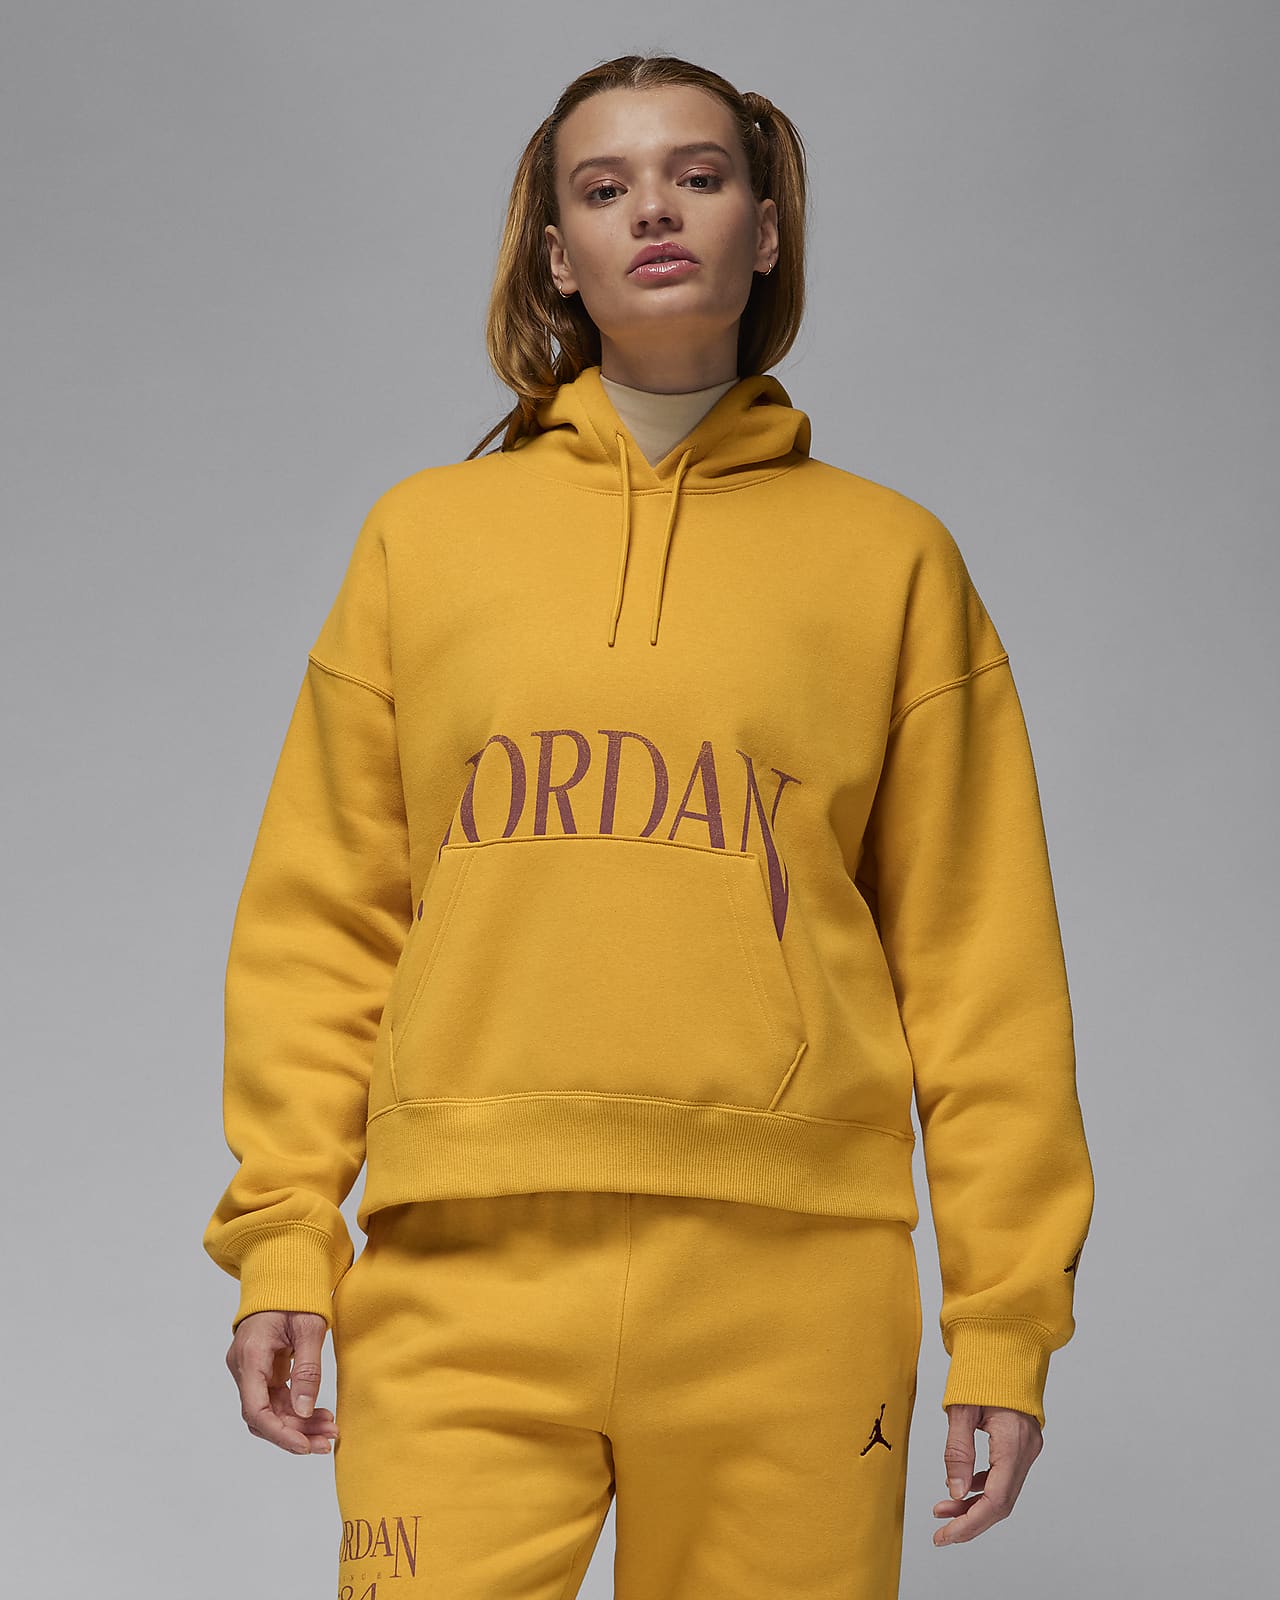 Jordan Brooklyn Fleece Sudadera con capucha - Mujer